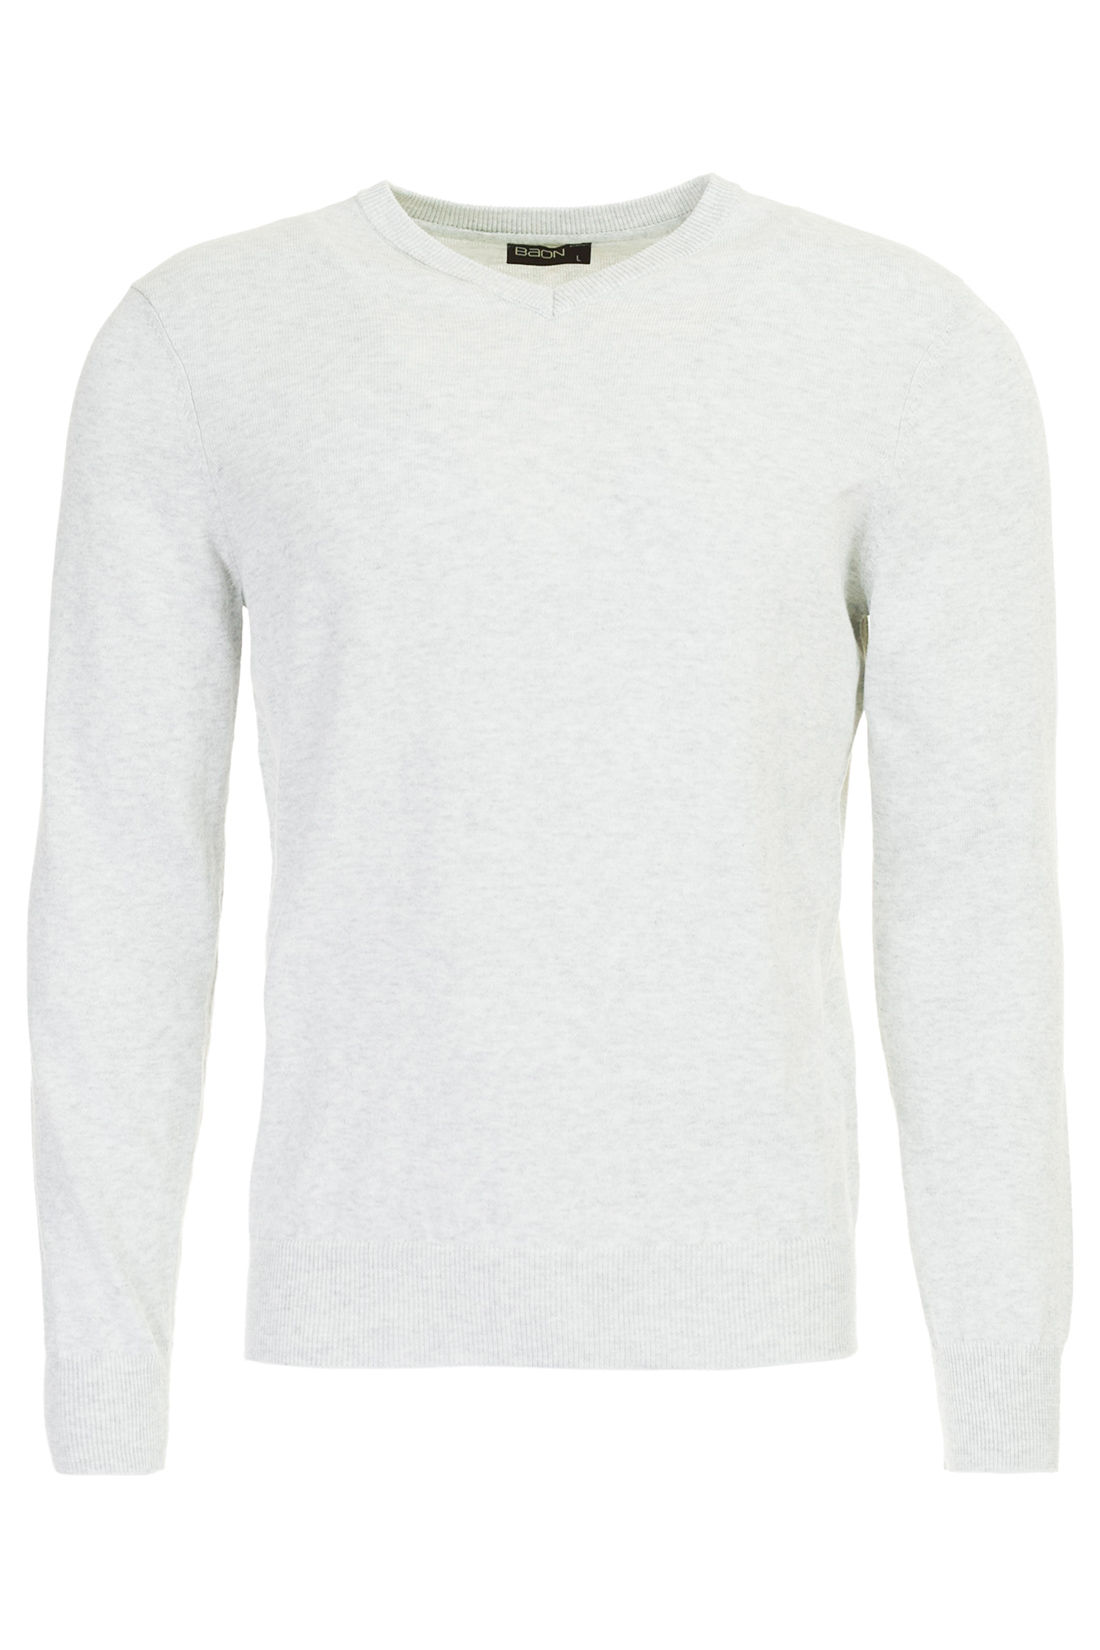 Базовый пуловер (арт. baon B637202), размер L, цвет light grey melange#серый Базовый пуловер (арт. baon B637202) - фото 4